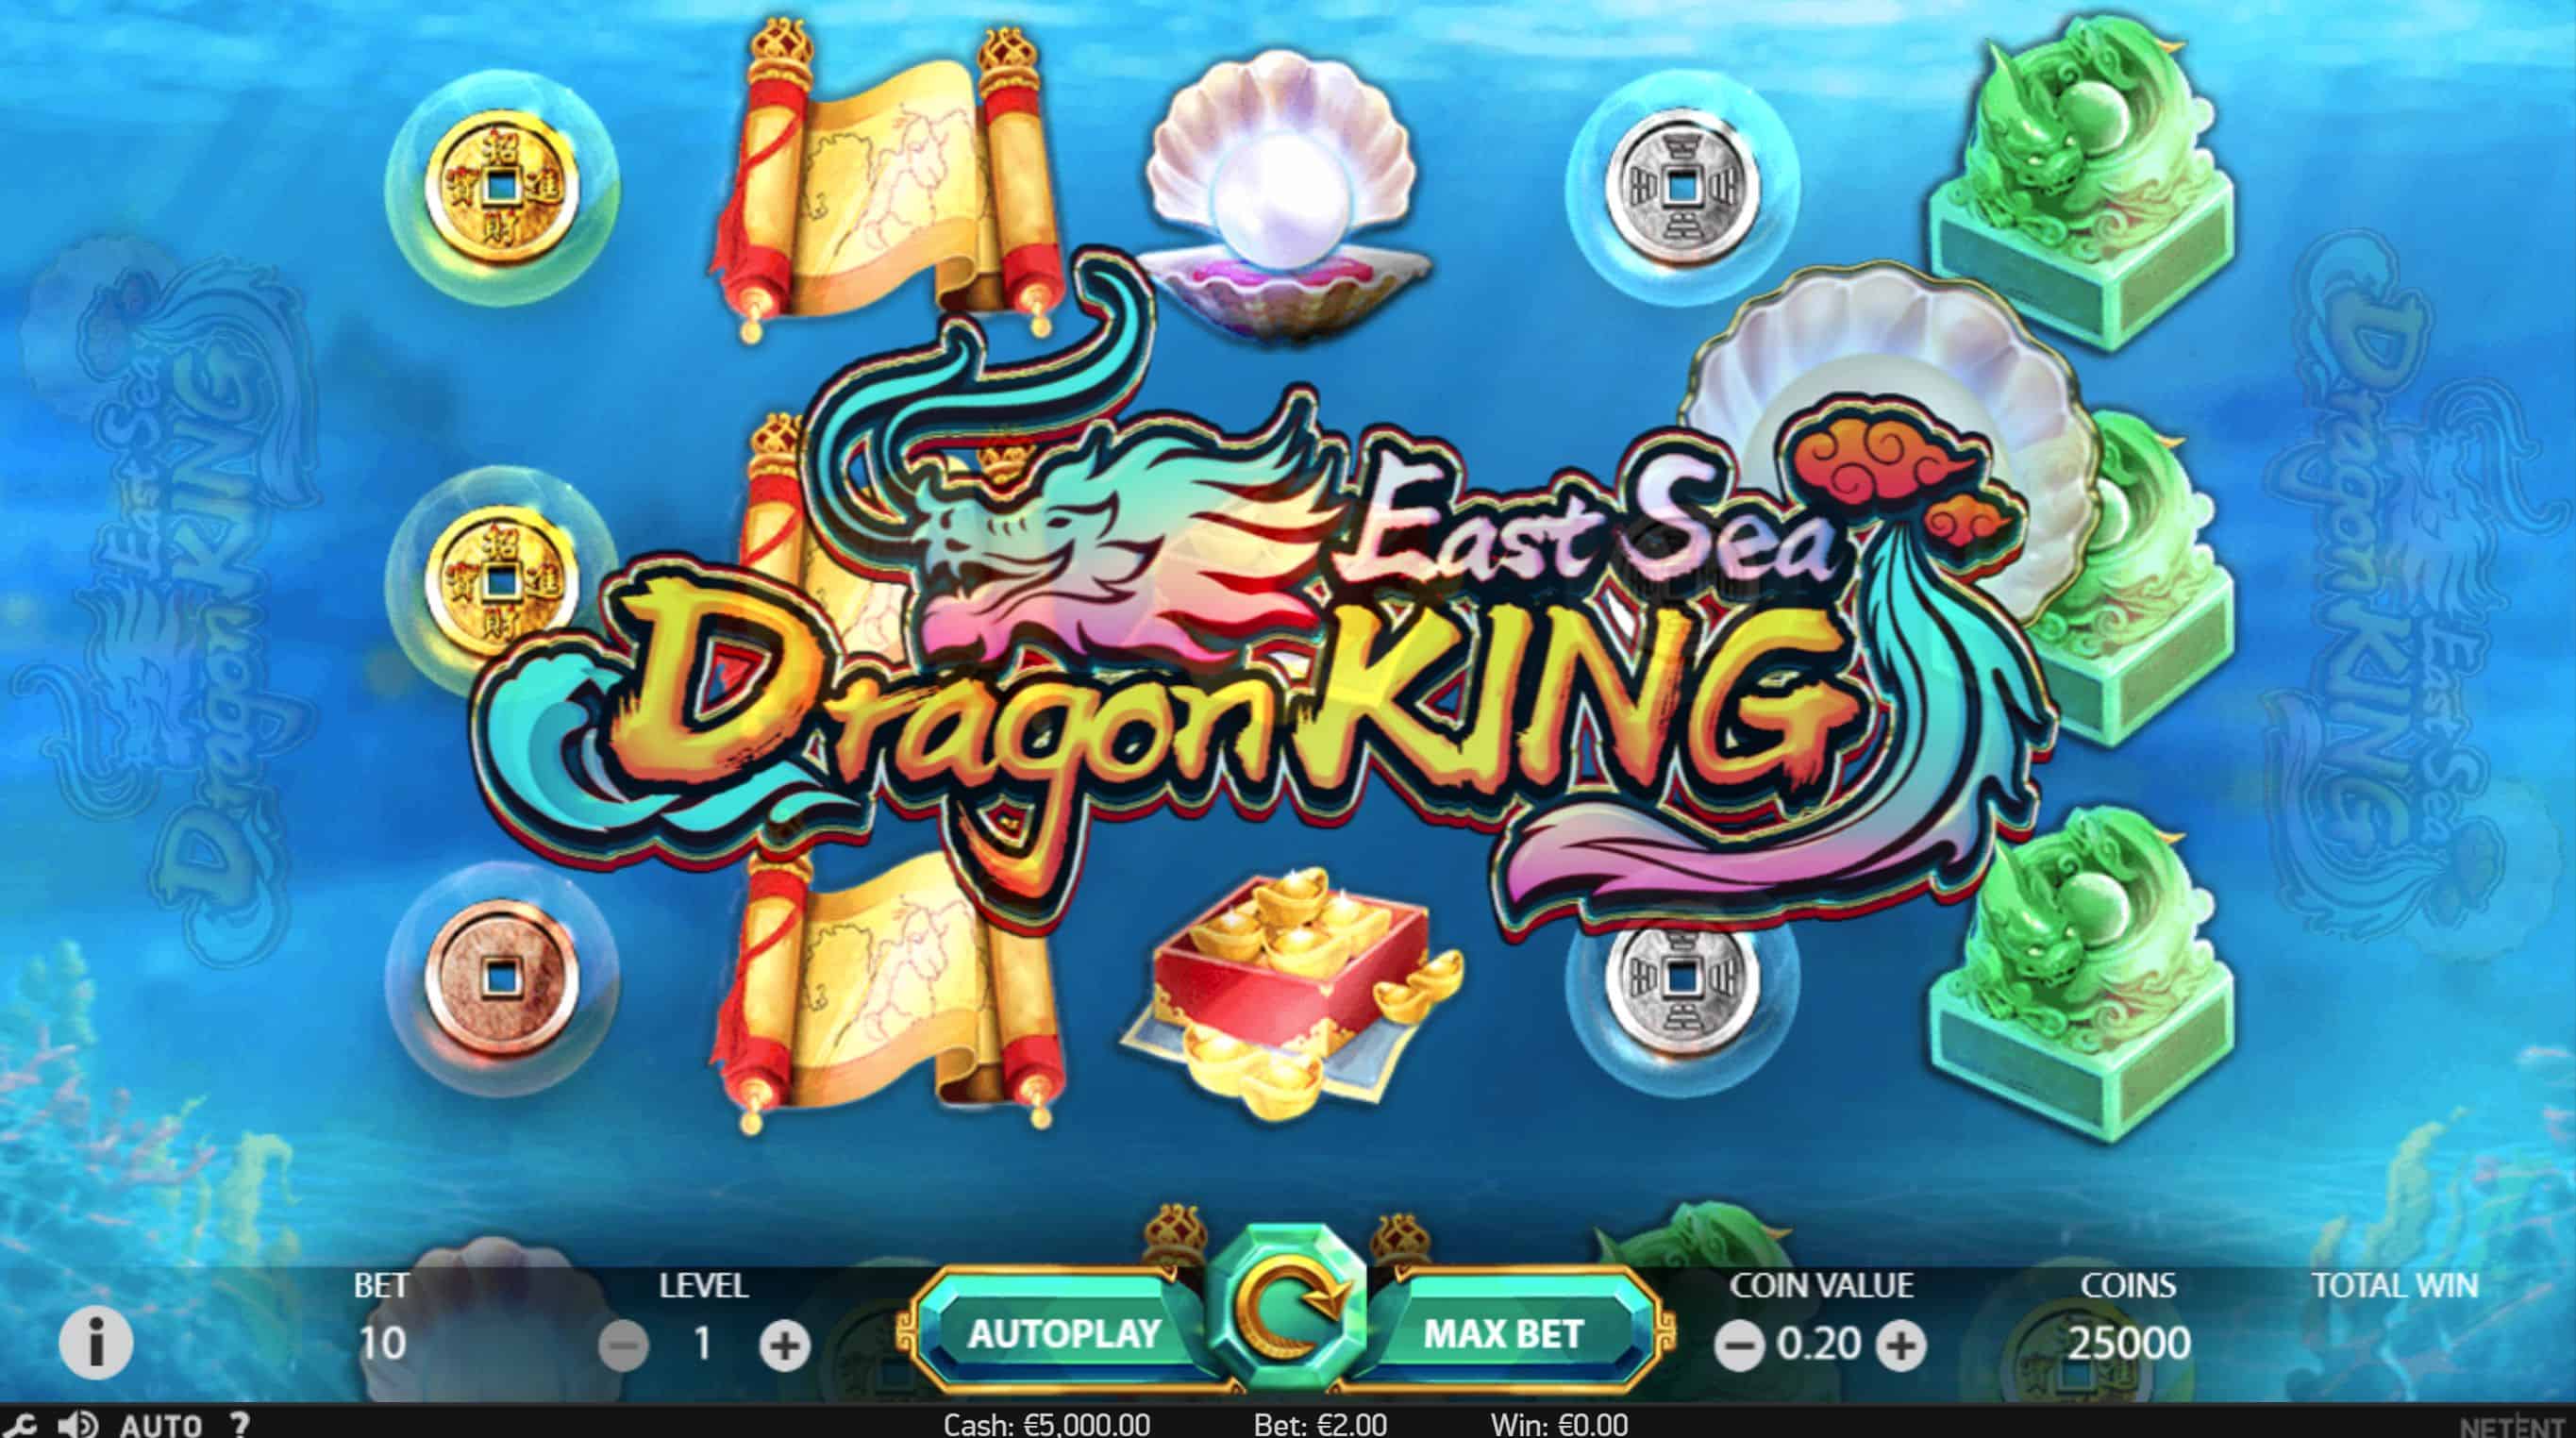 East Sea Dragon King Slot Game Free Play at Casino Ireland 01